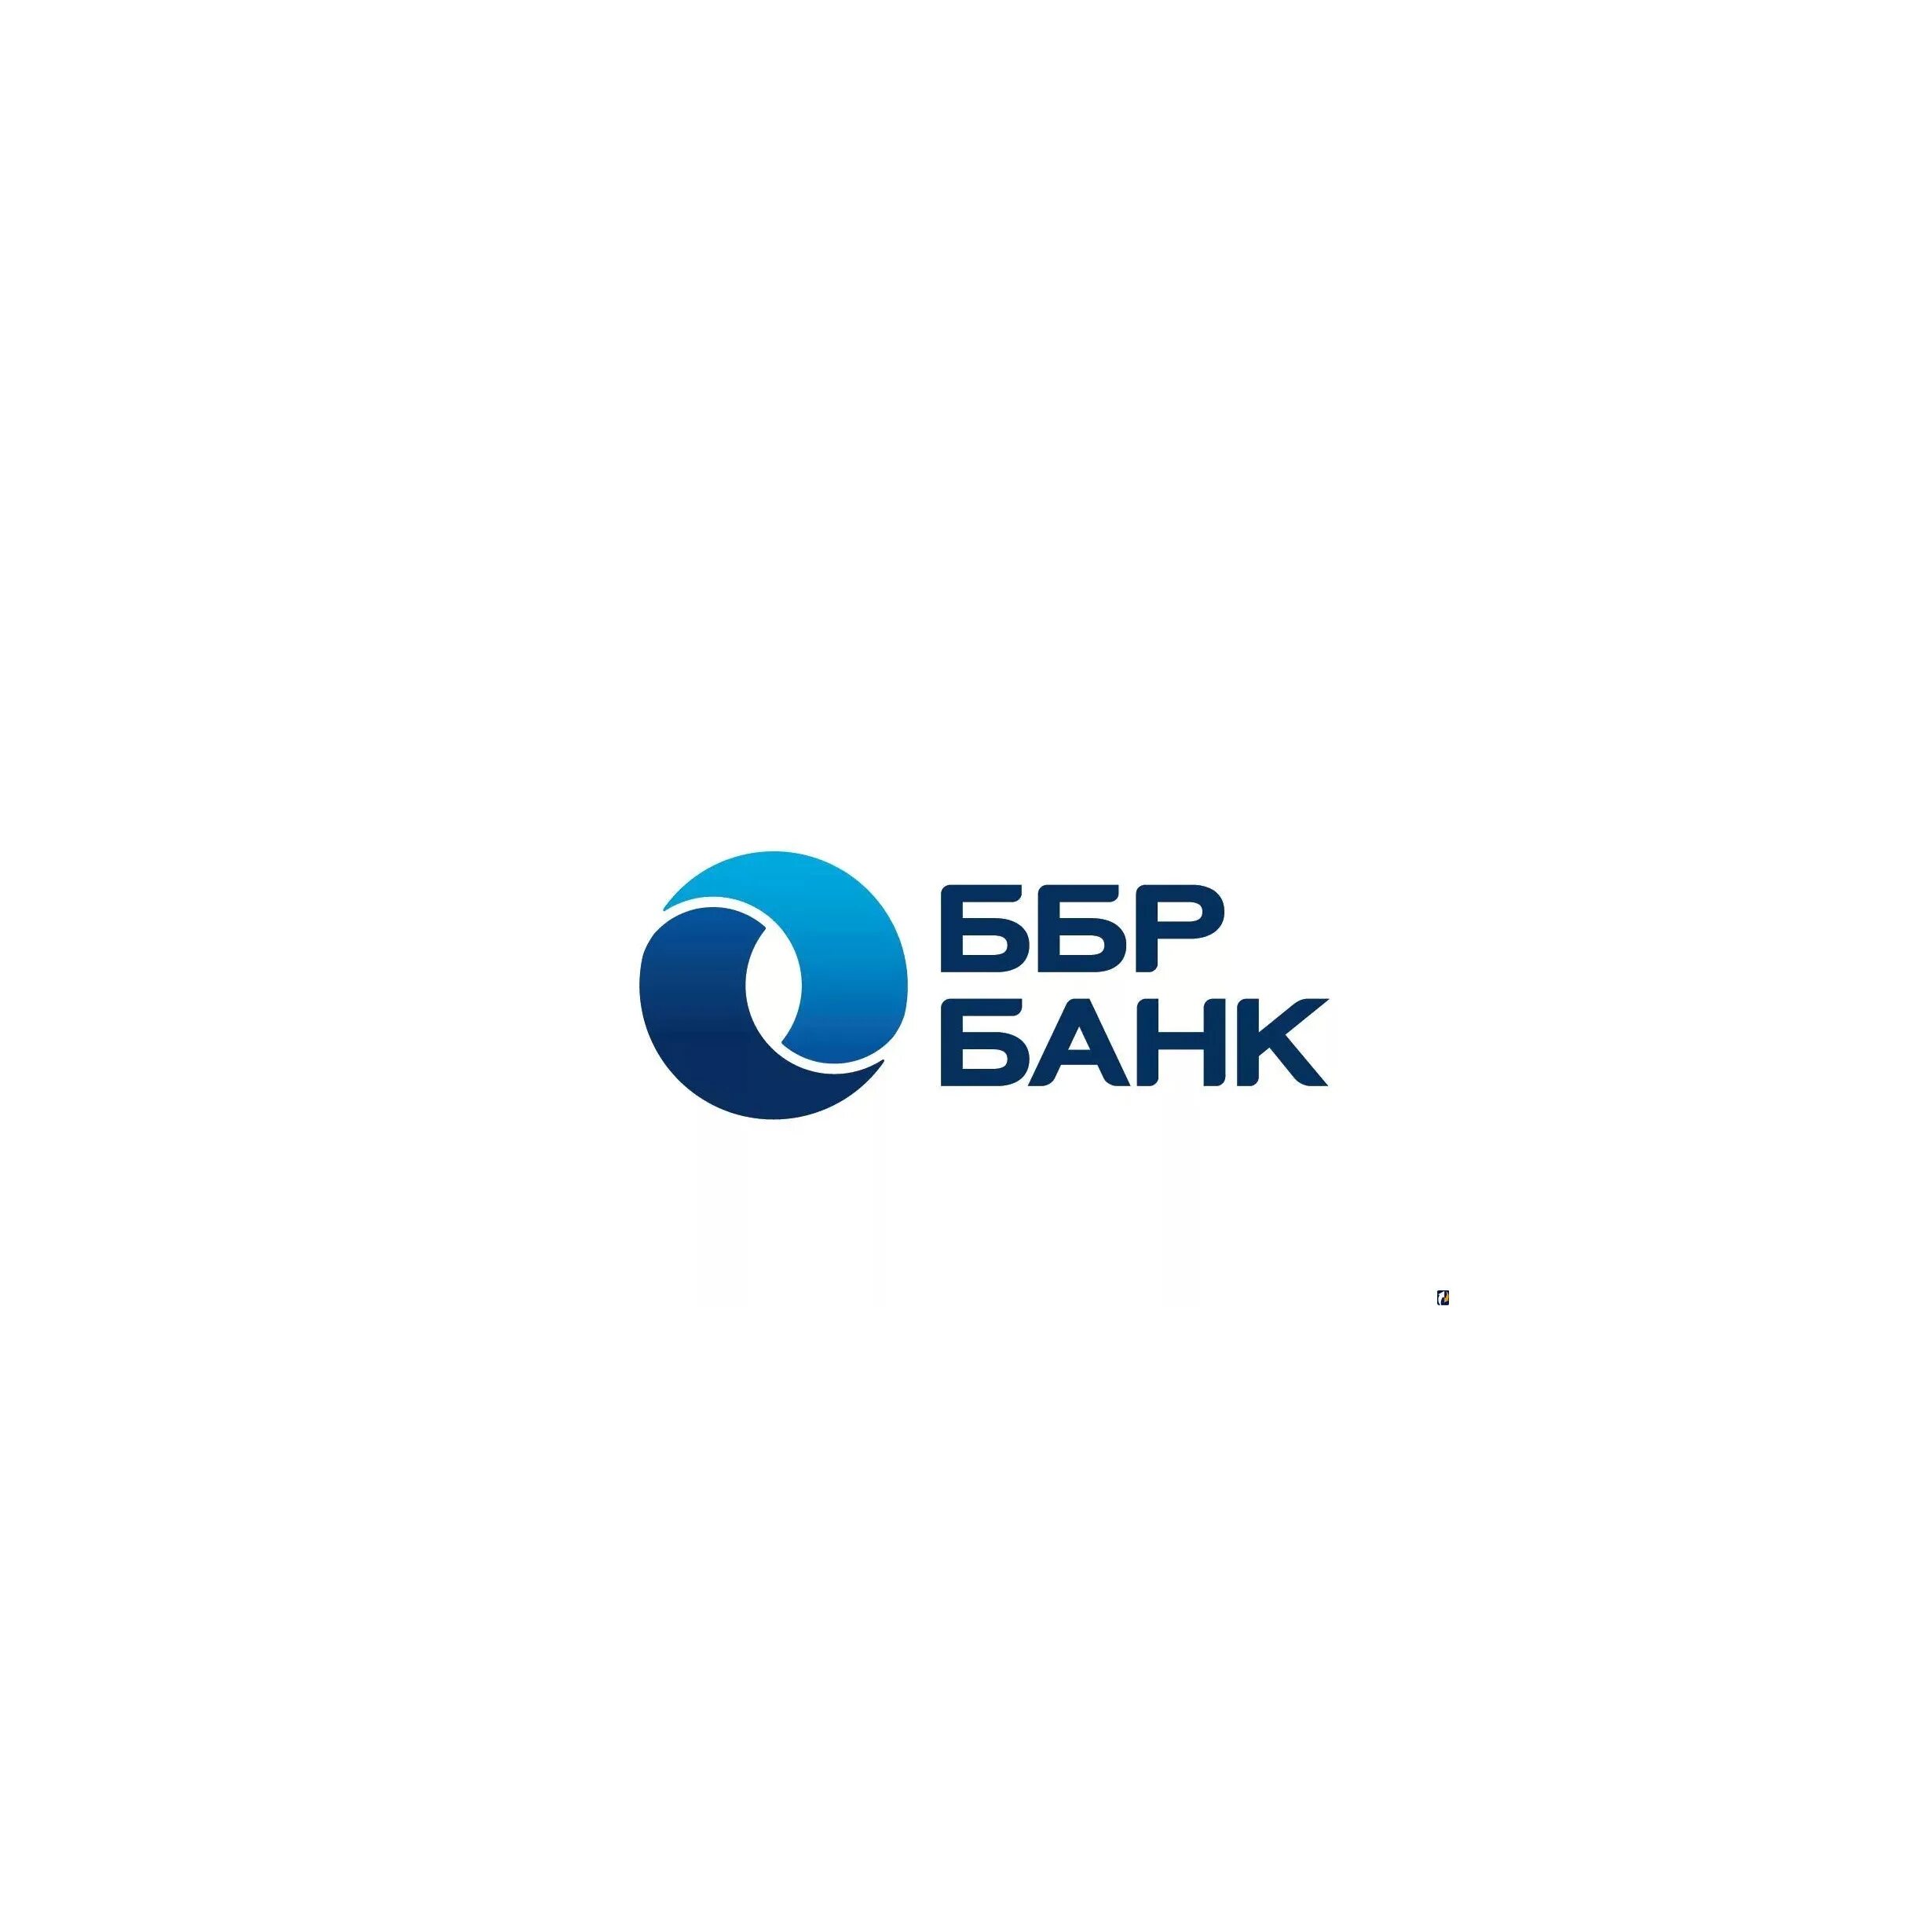 Ббр банк инвойс. ББР банк. ББР банк логотип. Балтийский банк развития. Балтийский банк развития логотип.